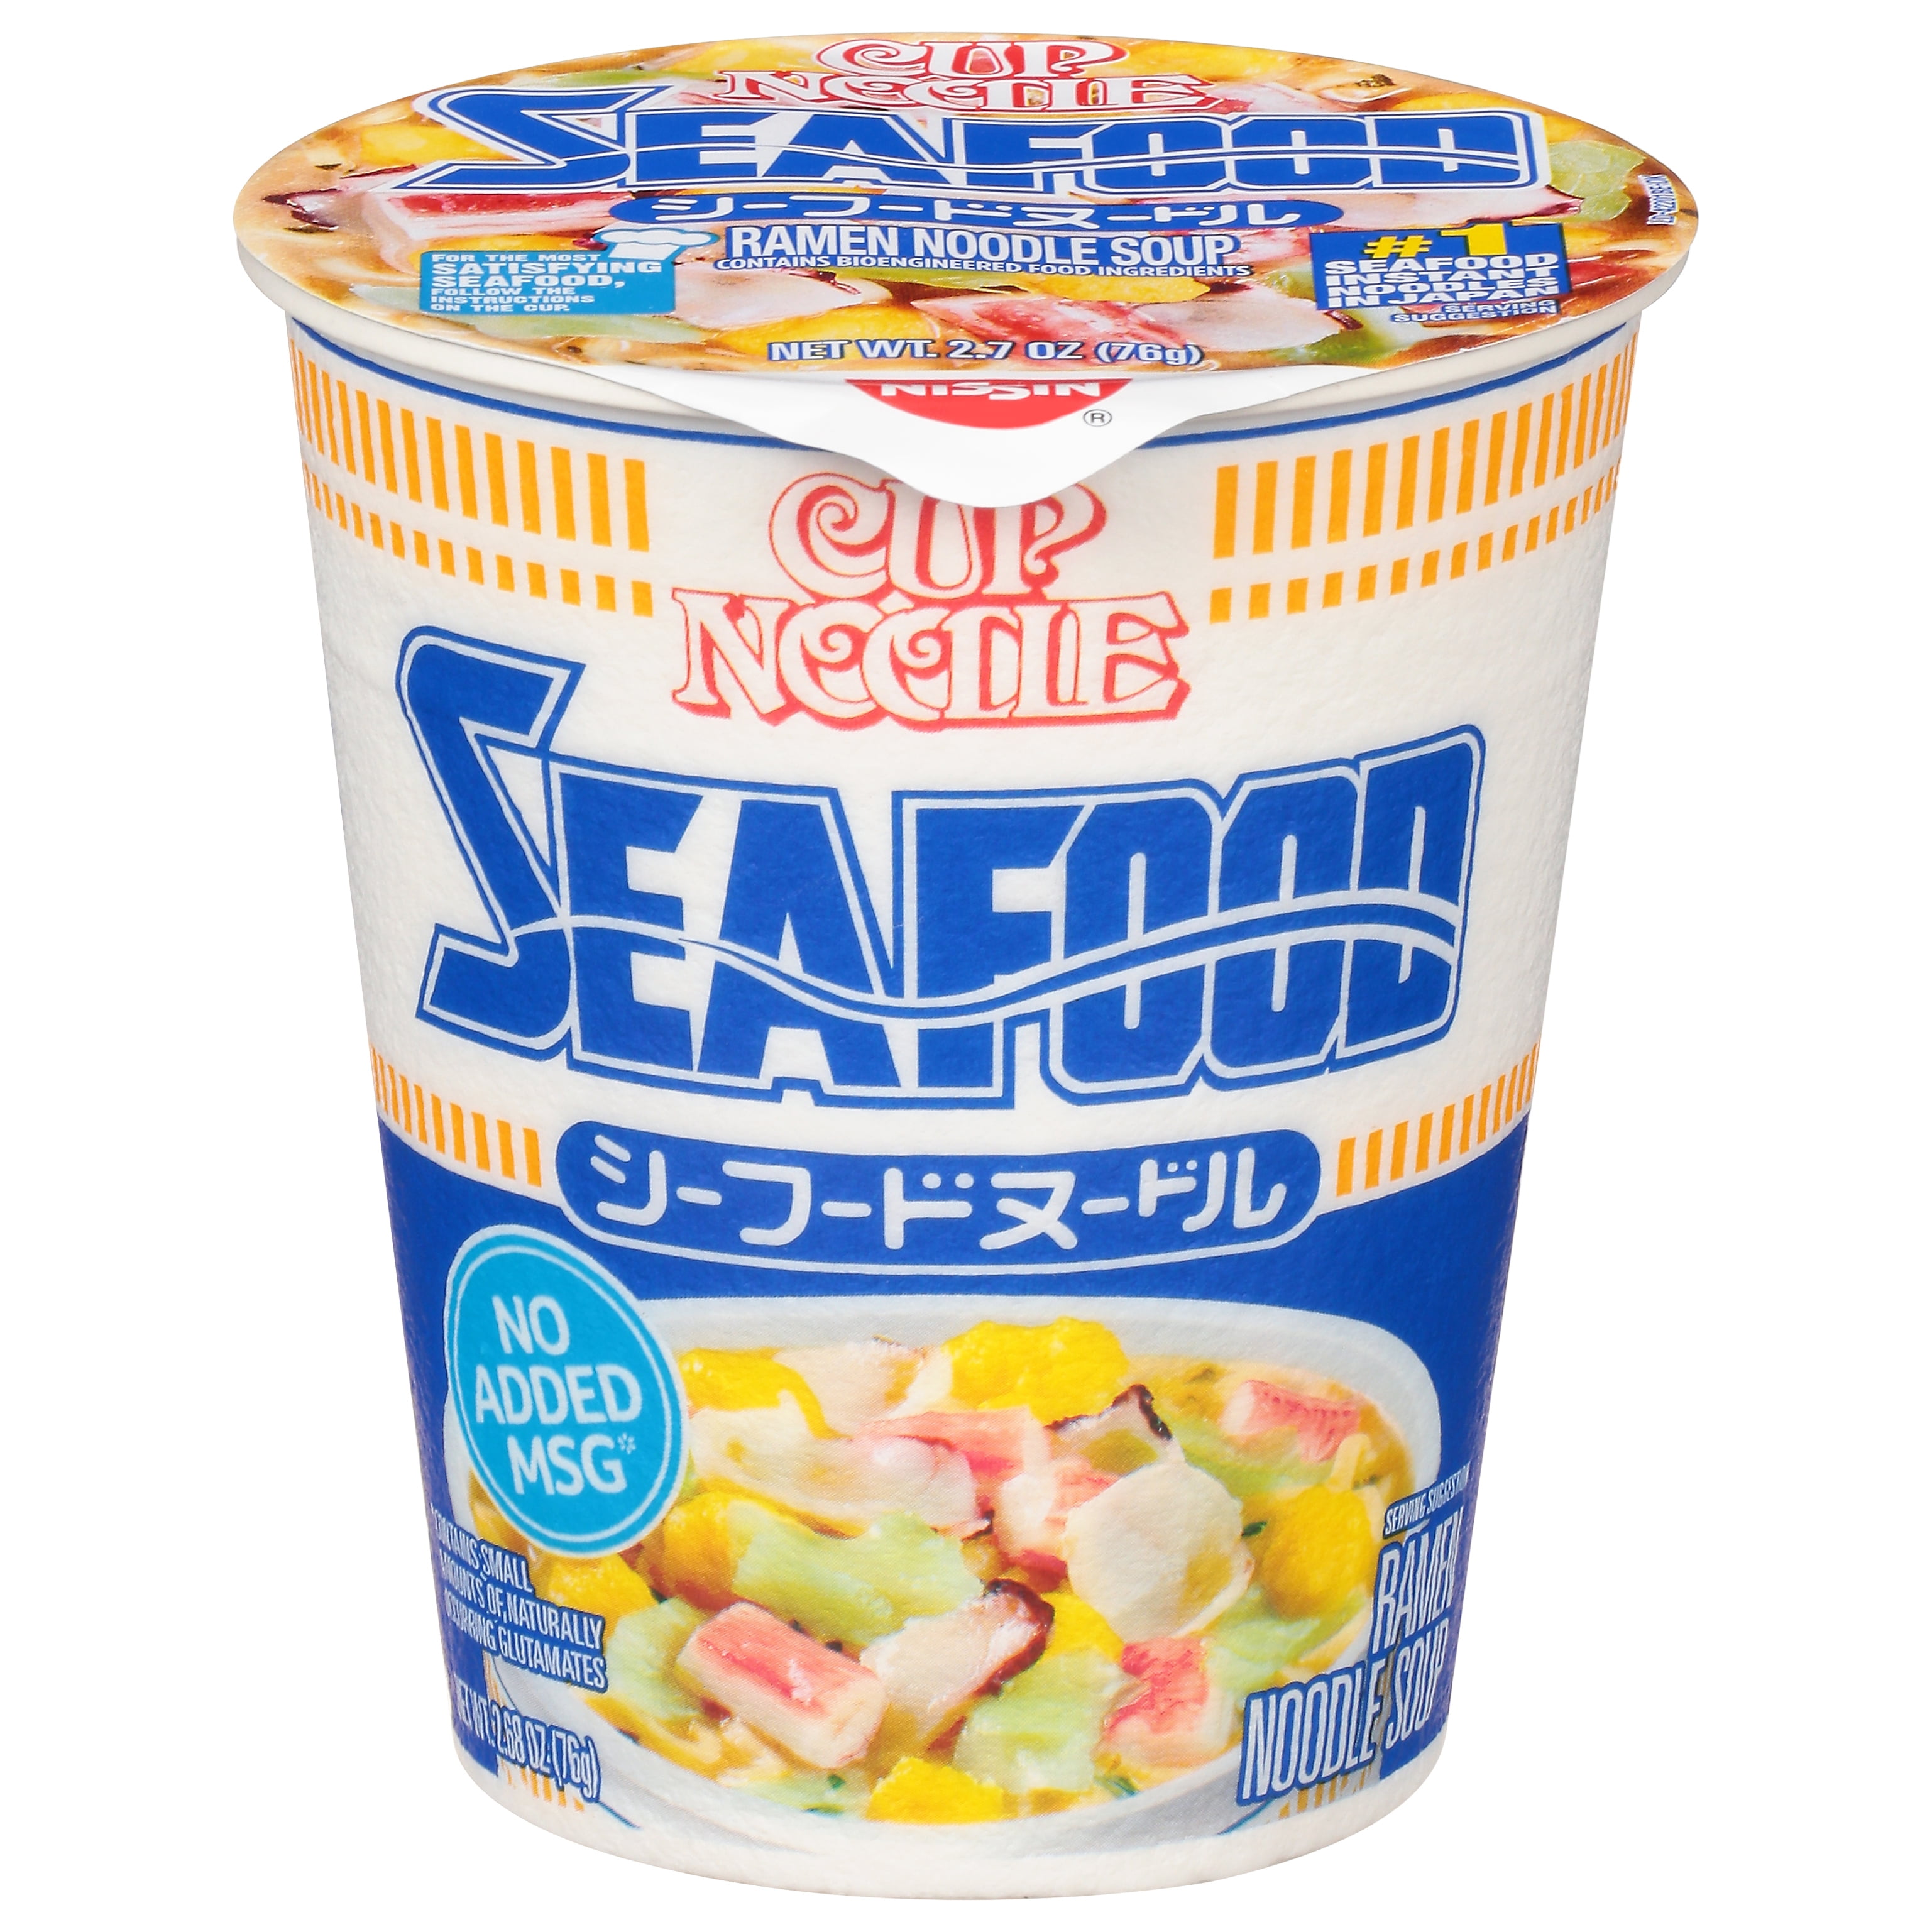 Nissin Cup Noodle Ramen Noodle Soup 10 flavor Variety Pack (Japan Import),  10 Count (Pack of 1)